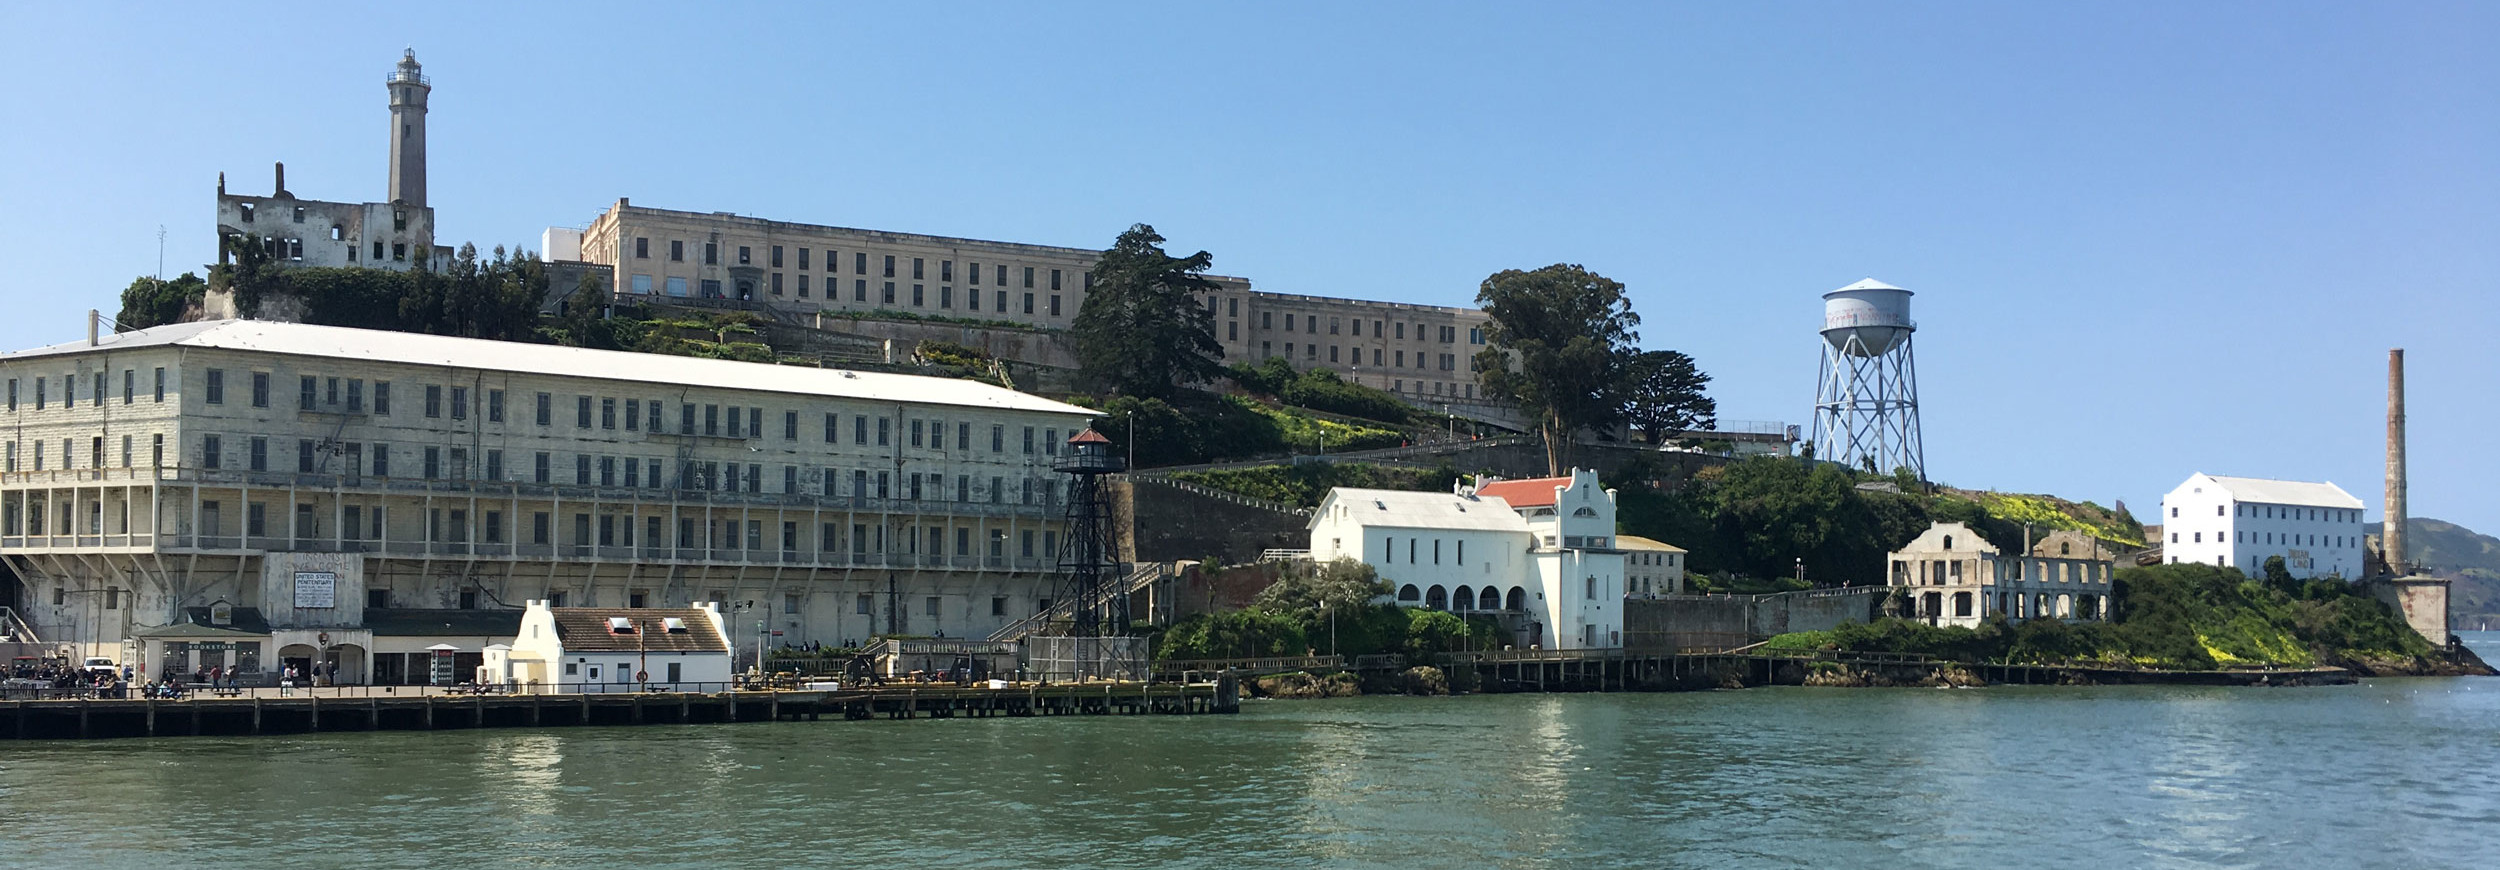 Reisebericht Kalifornien - Gefängnisinsel Alcatraz